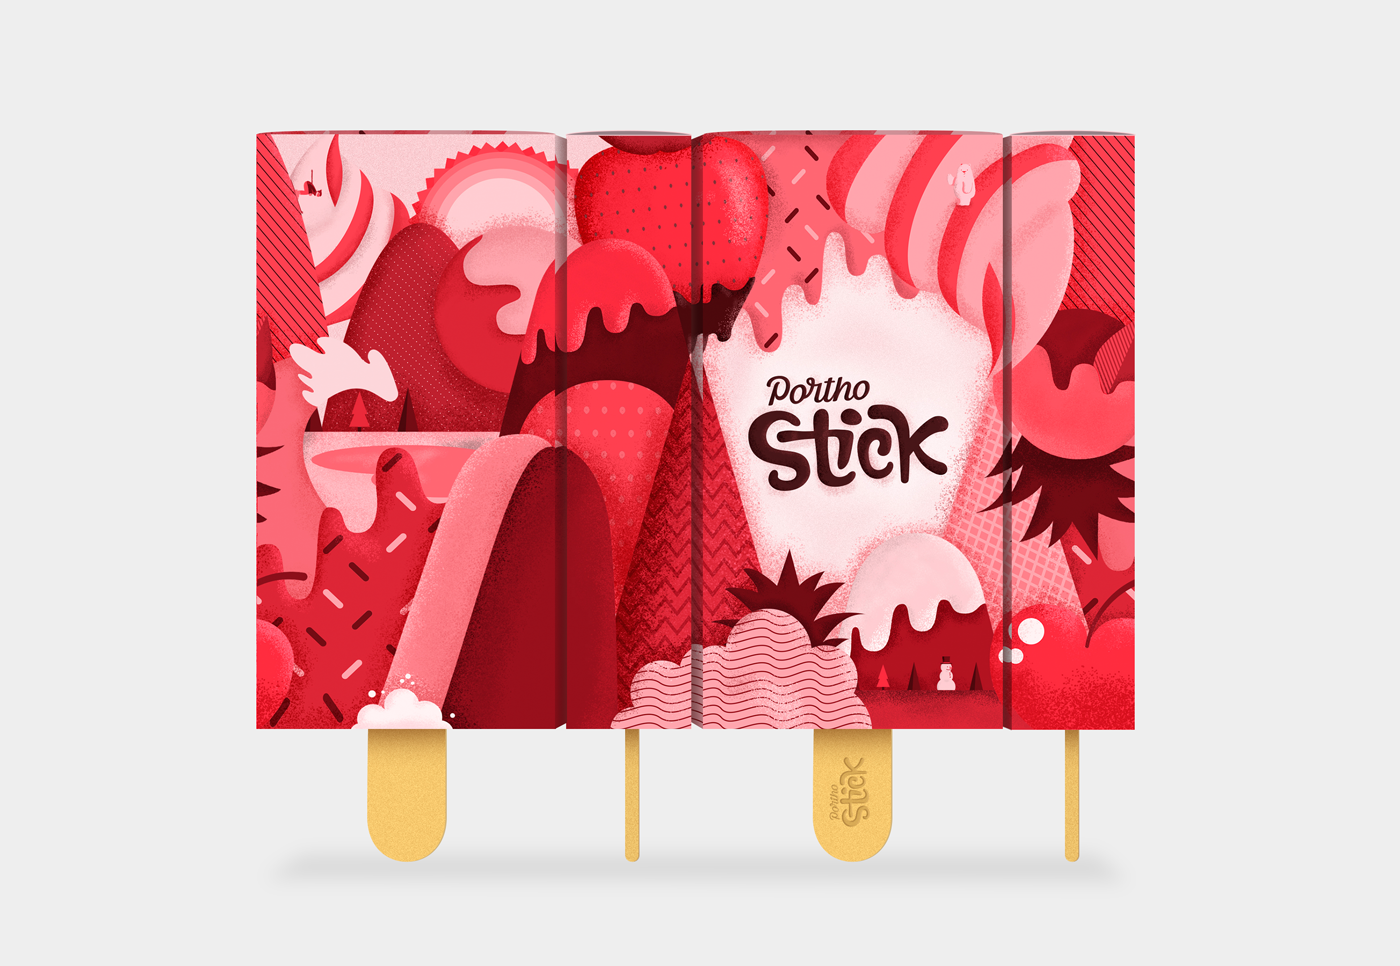 Portho Stick冰棒包装设计